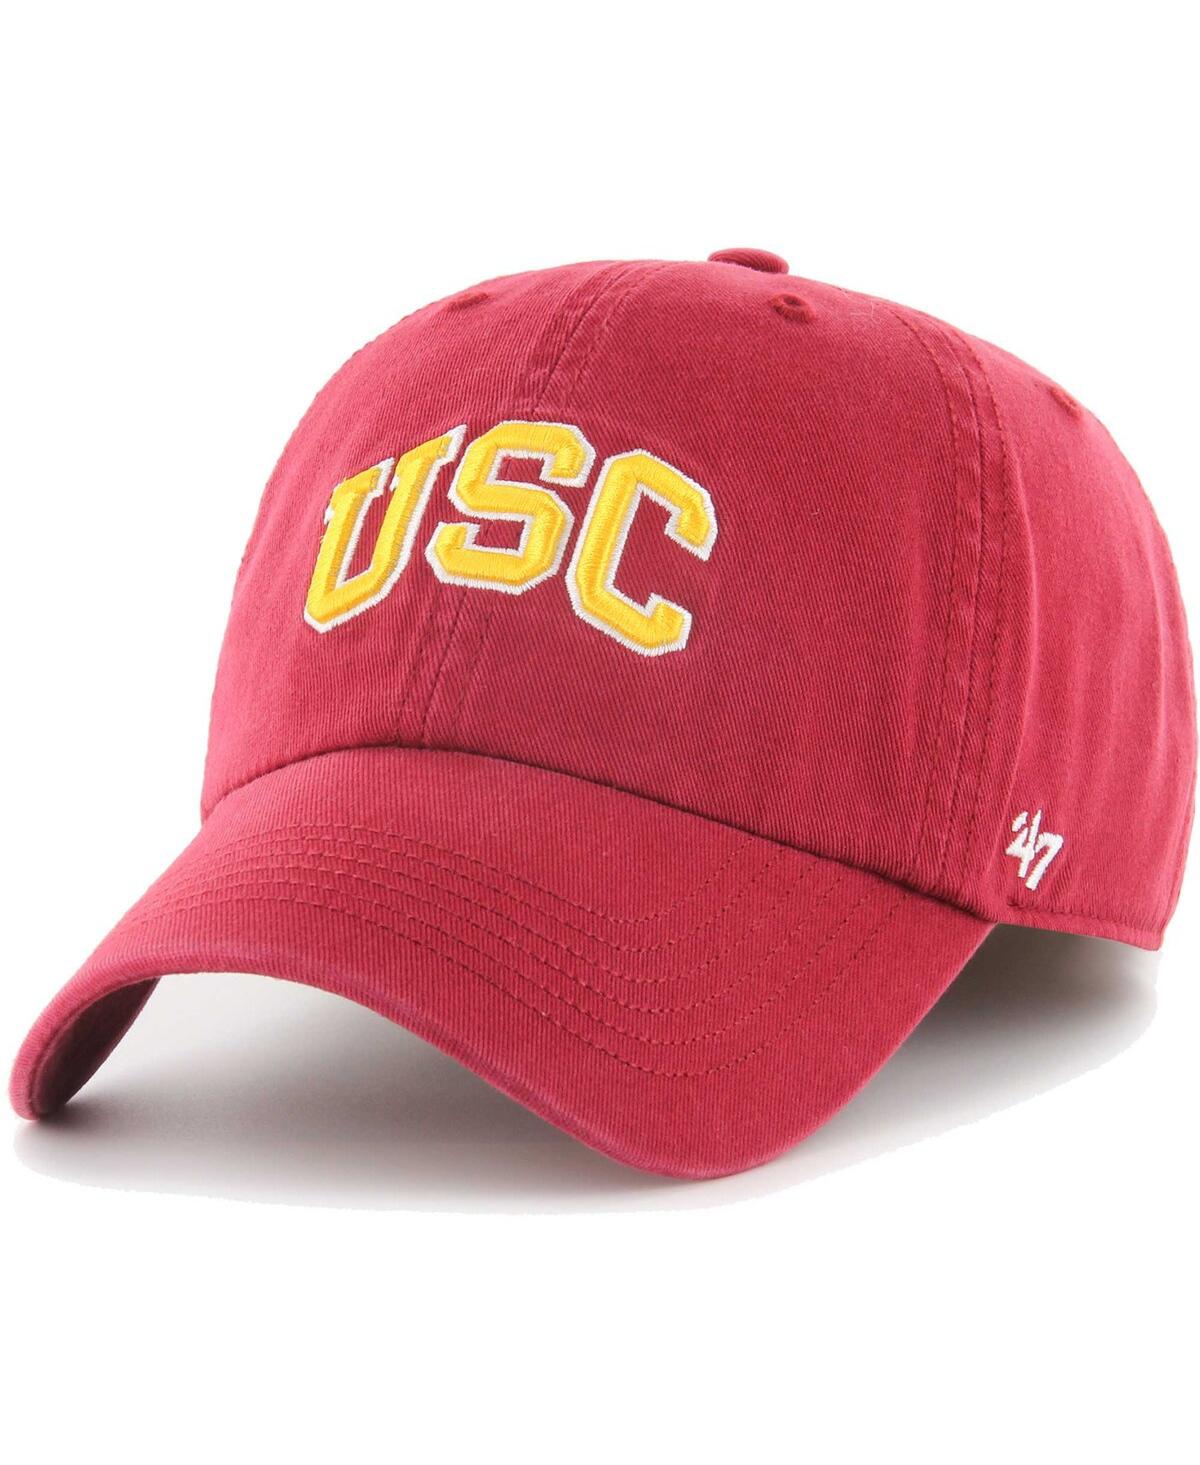 47 Brand Men's ' Cardinal Usc Trojans Franchise Fitted Hat